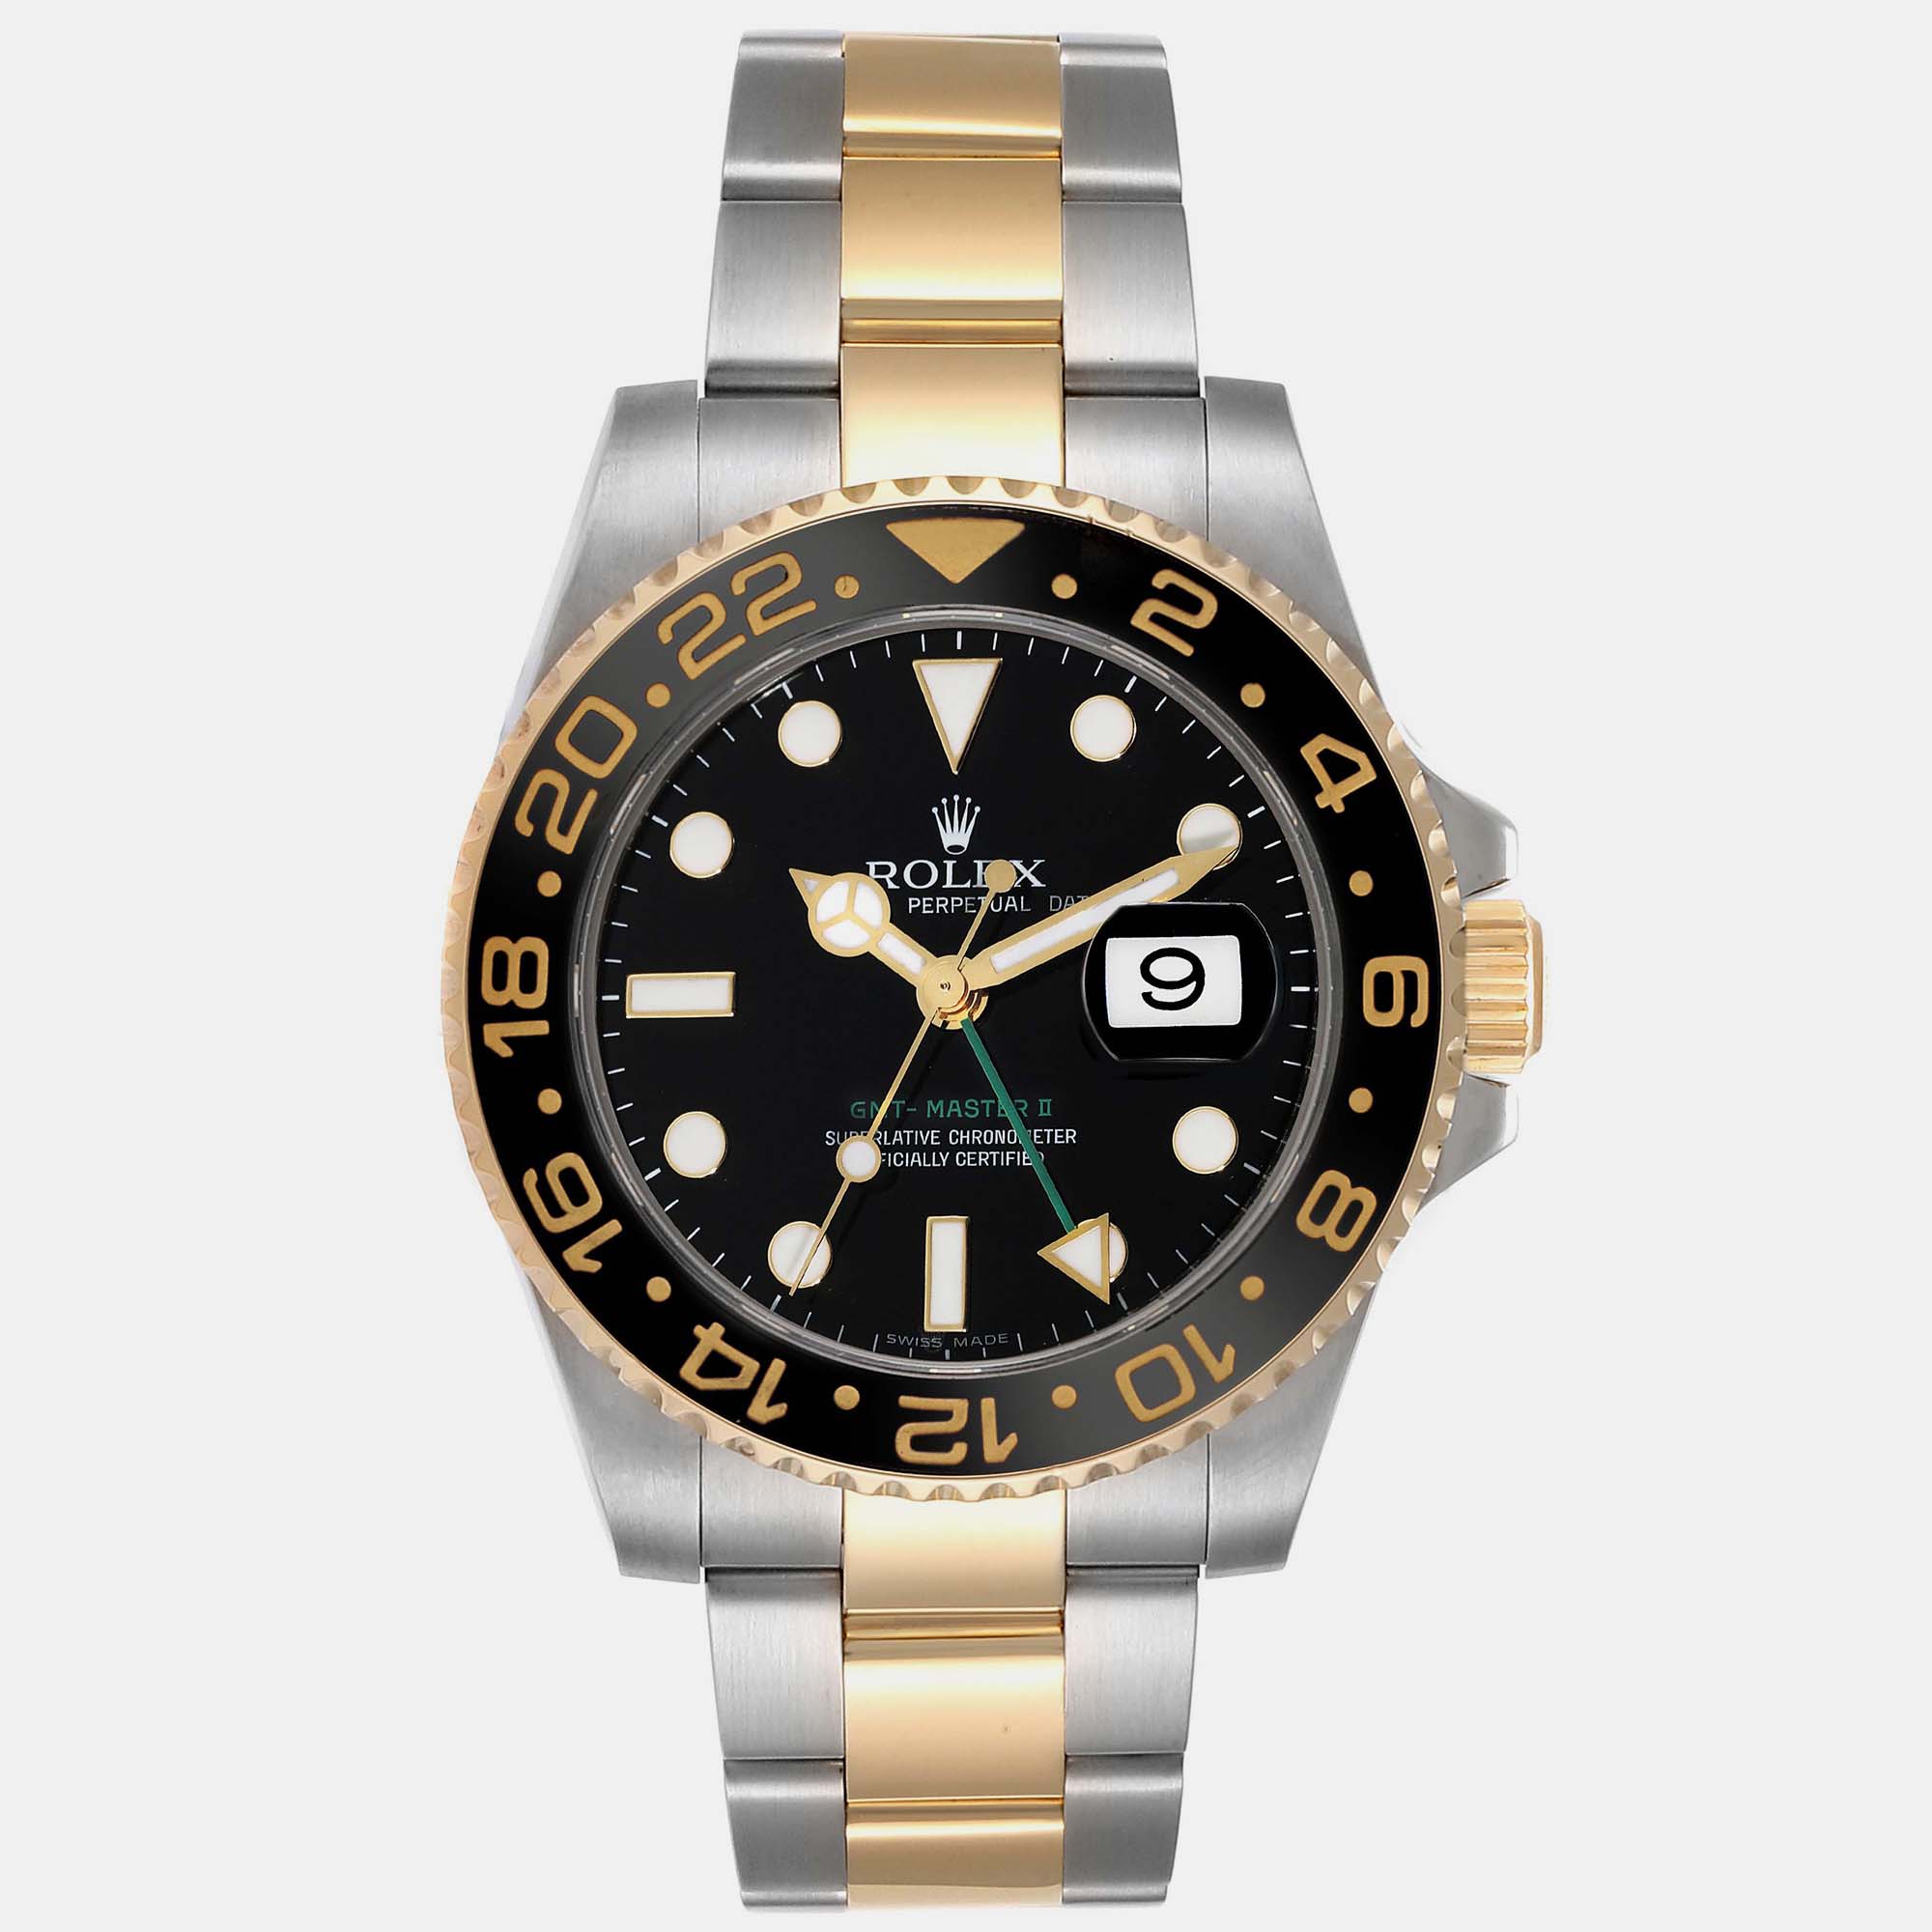 Rolex gmt master ii steel yellow gold black dial men's watch 40 mm